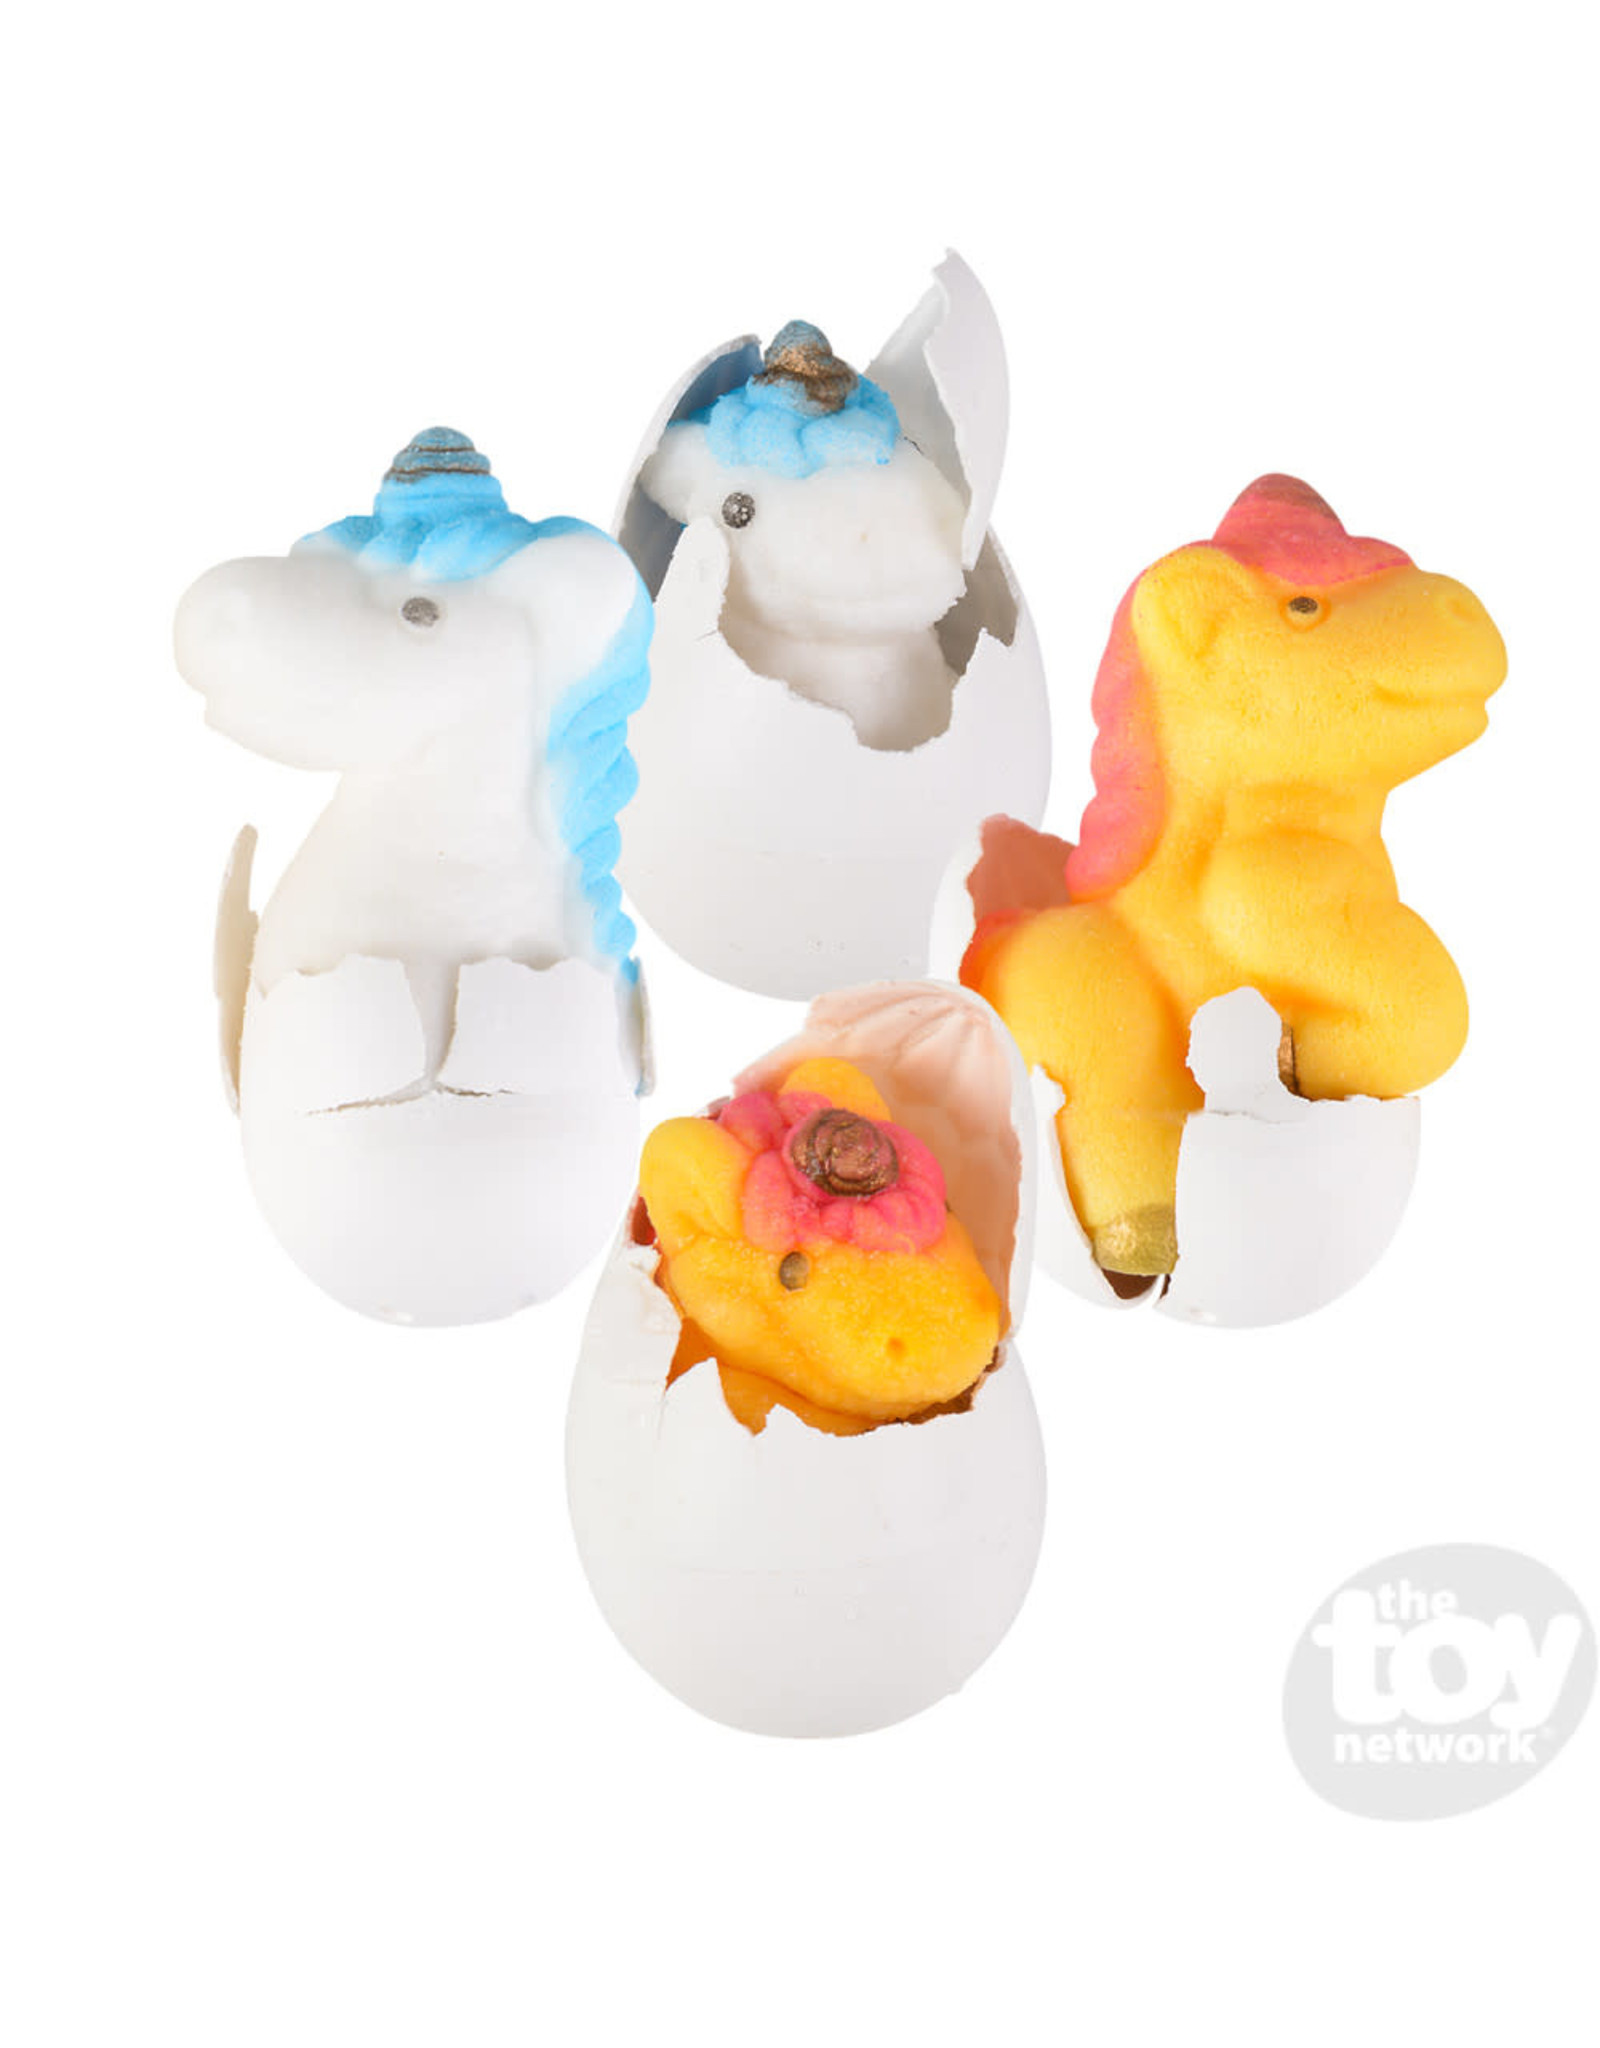 The Toy Network Growing Unicorn Egg